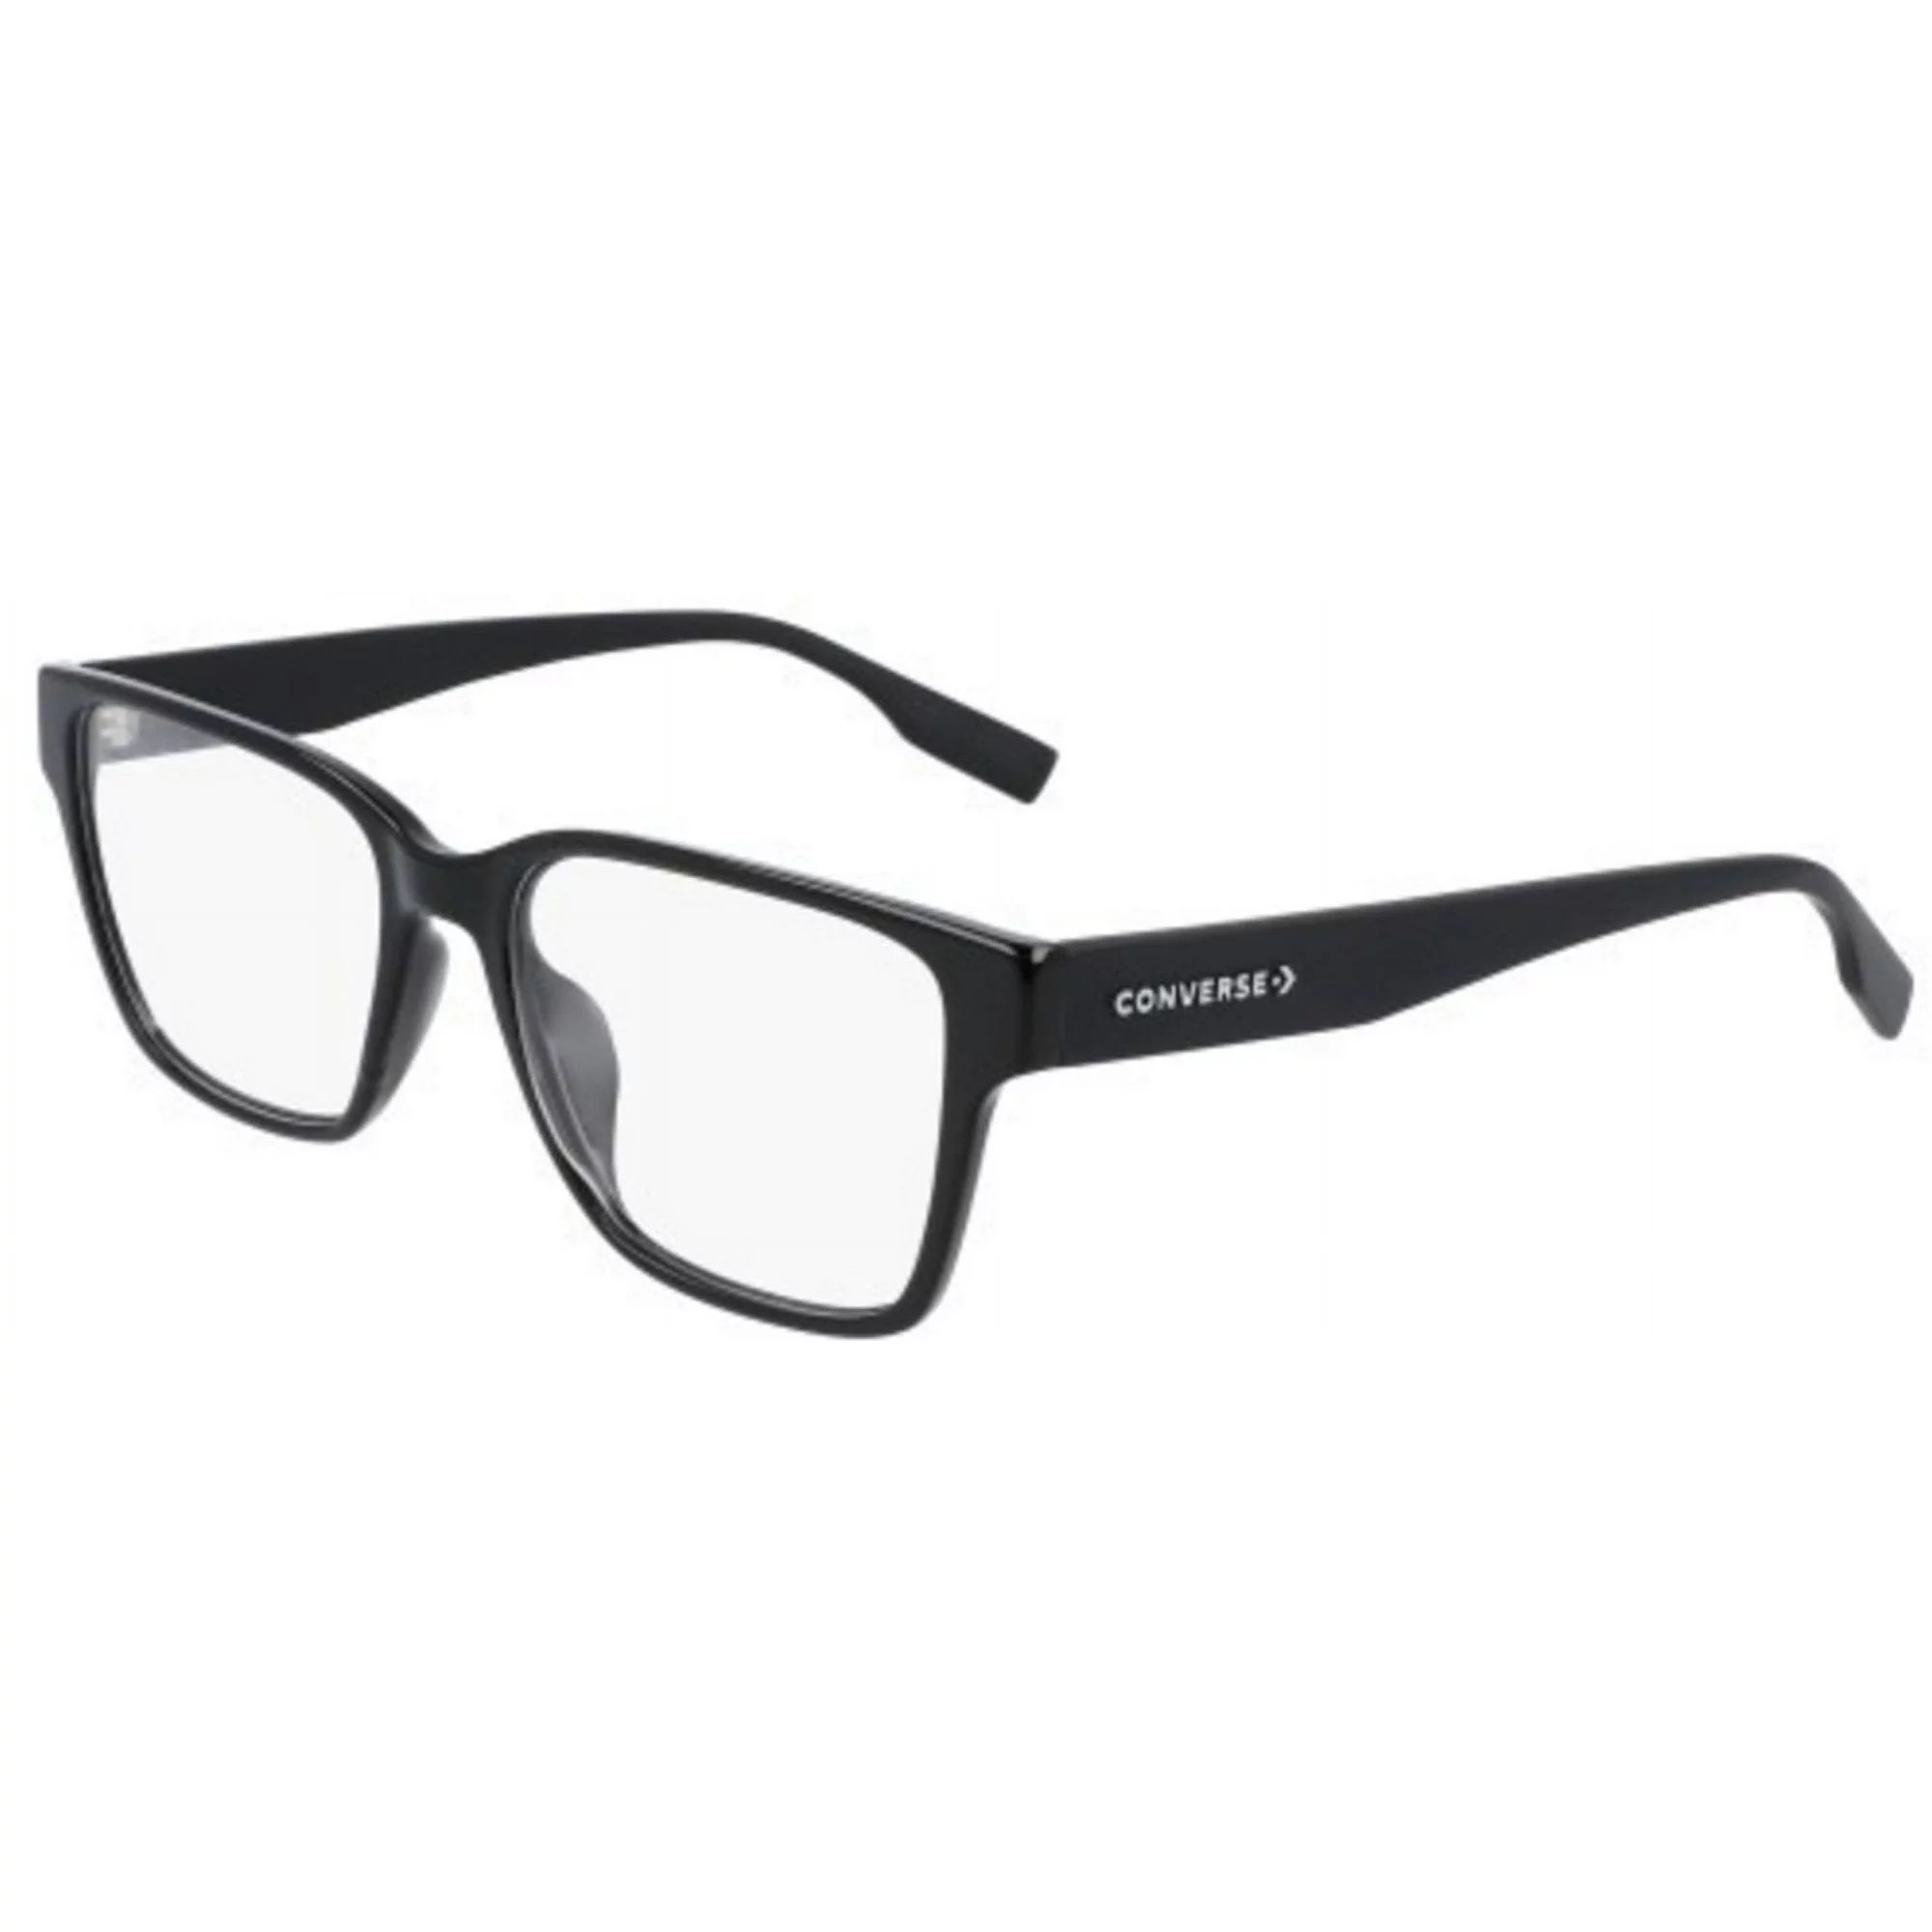 Eyeglasses CONVERSE CV 5017 001 Black | Walmart (US)